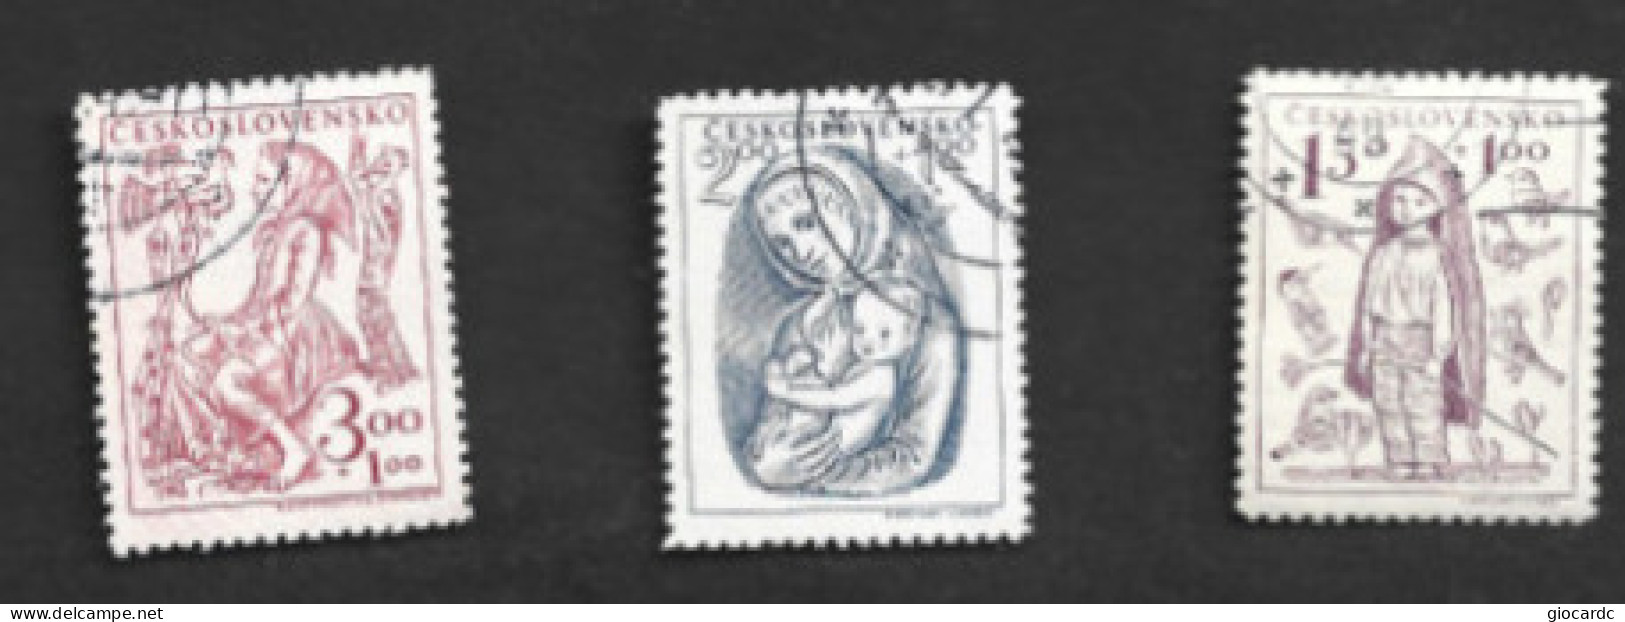 CECOSLOVACCHIA (CZECHOSLOVAKIA) - SG 532.534  - 1948 CHILD WELFARE (COMPLET SET OF 3) - USED - Oblitérés